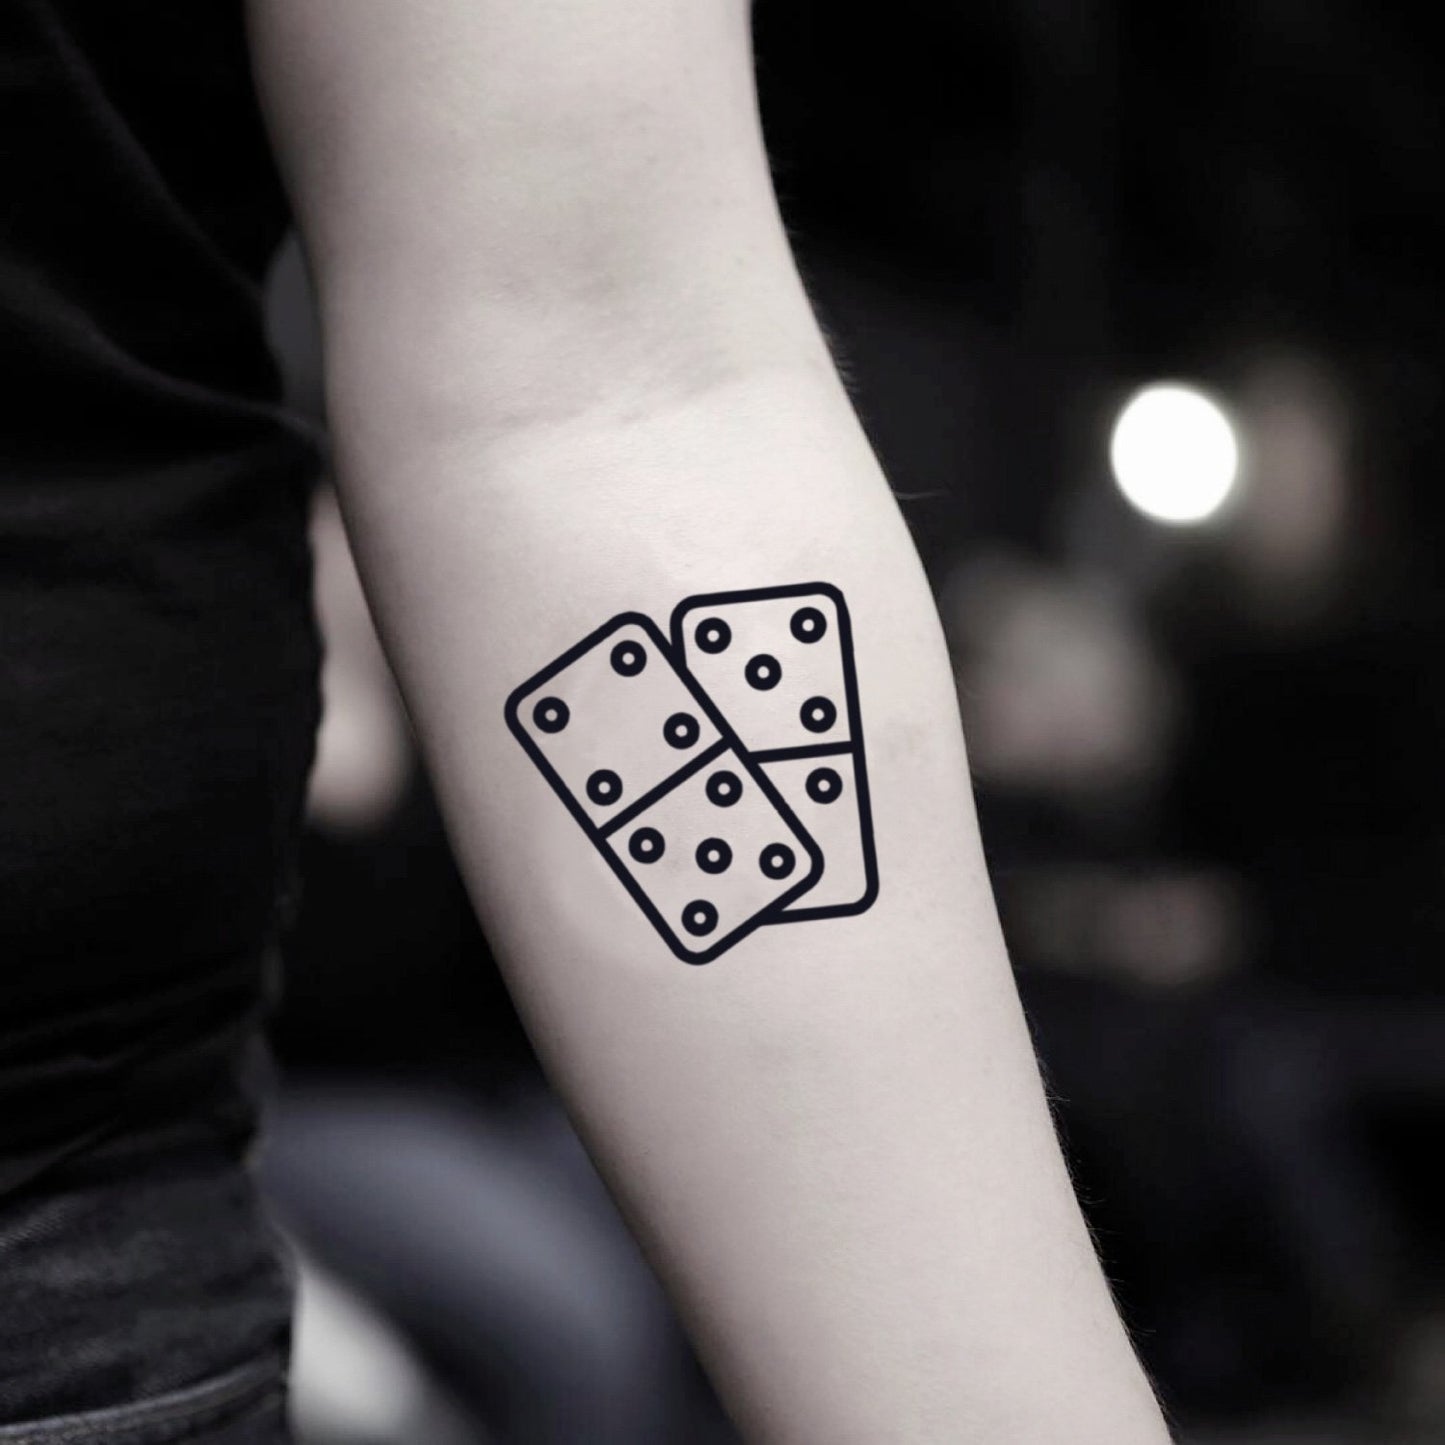 fake small domino minimalist temporary tattoo sticker design idea on inner arm